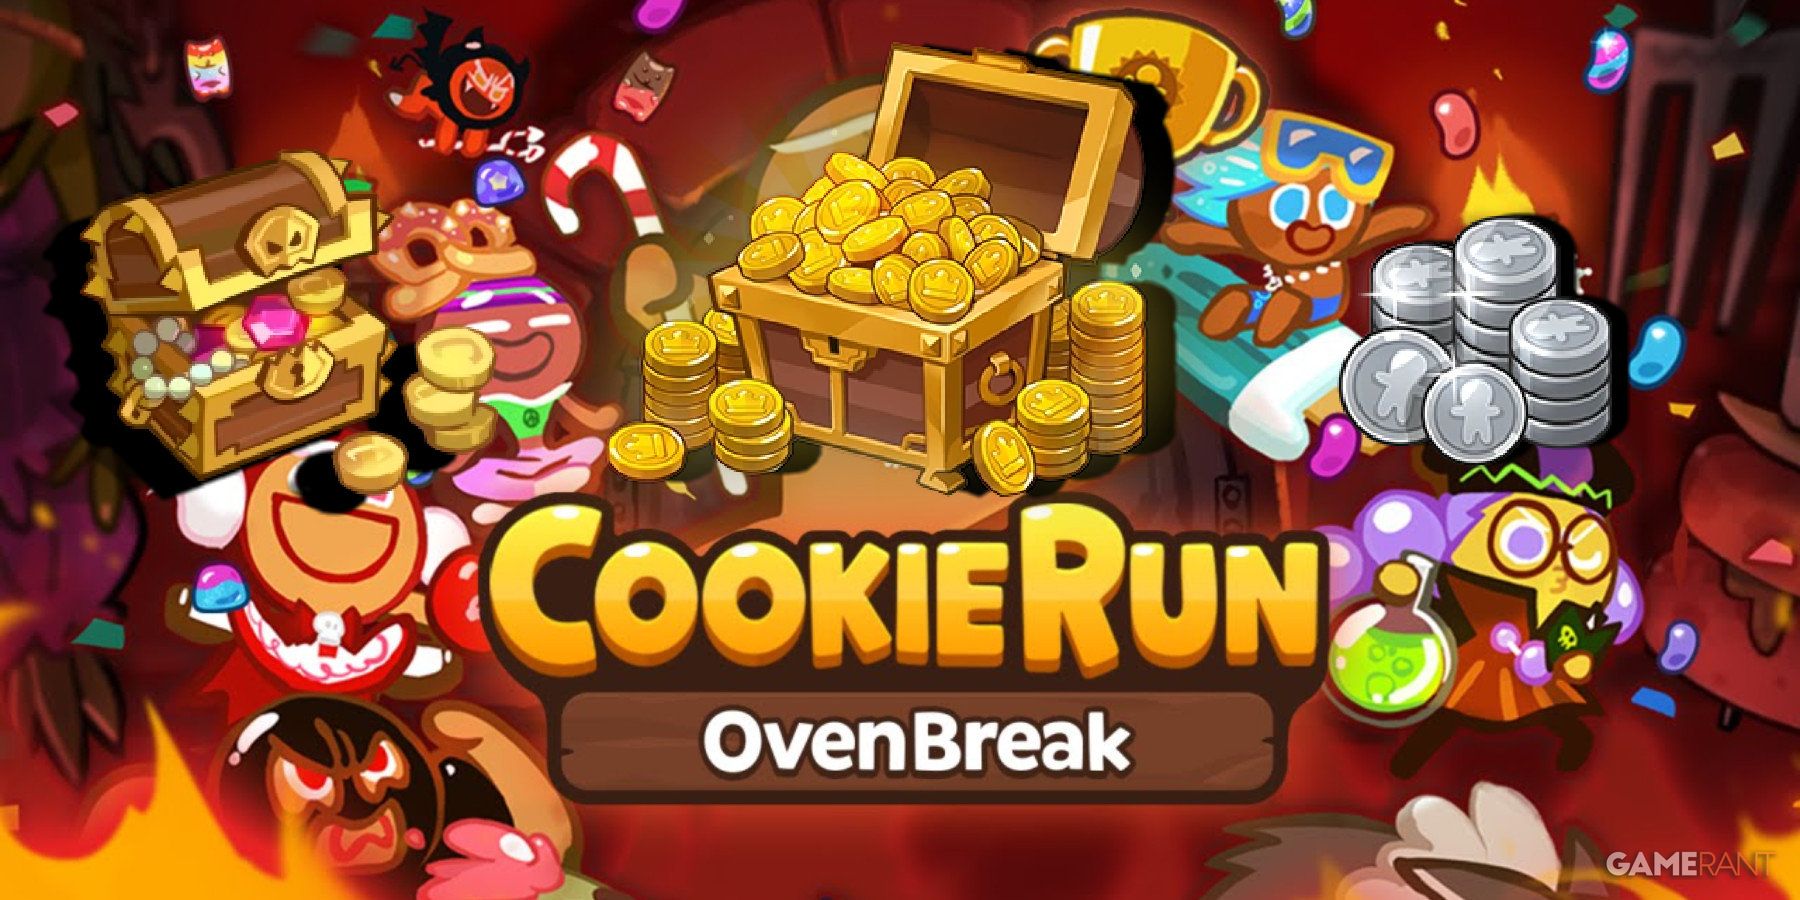 CookieRun OverBreak Coins Guide